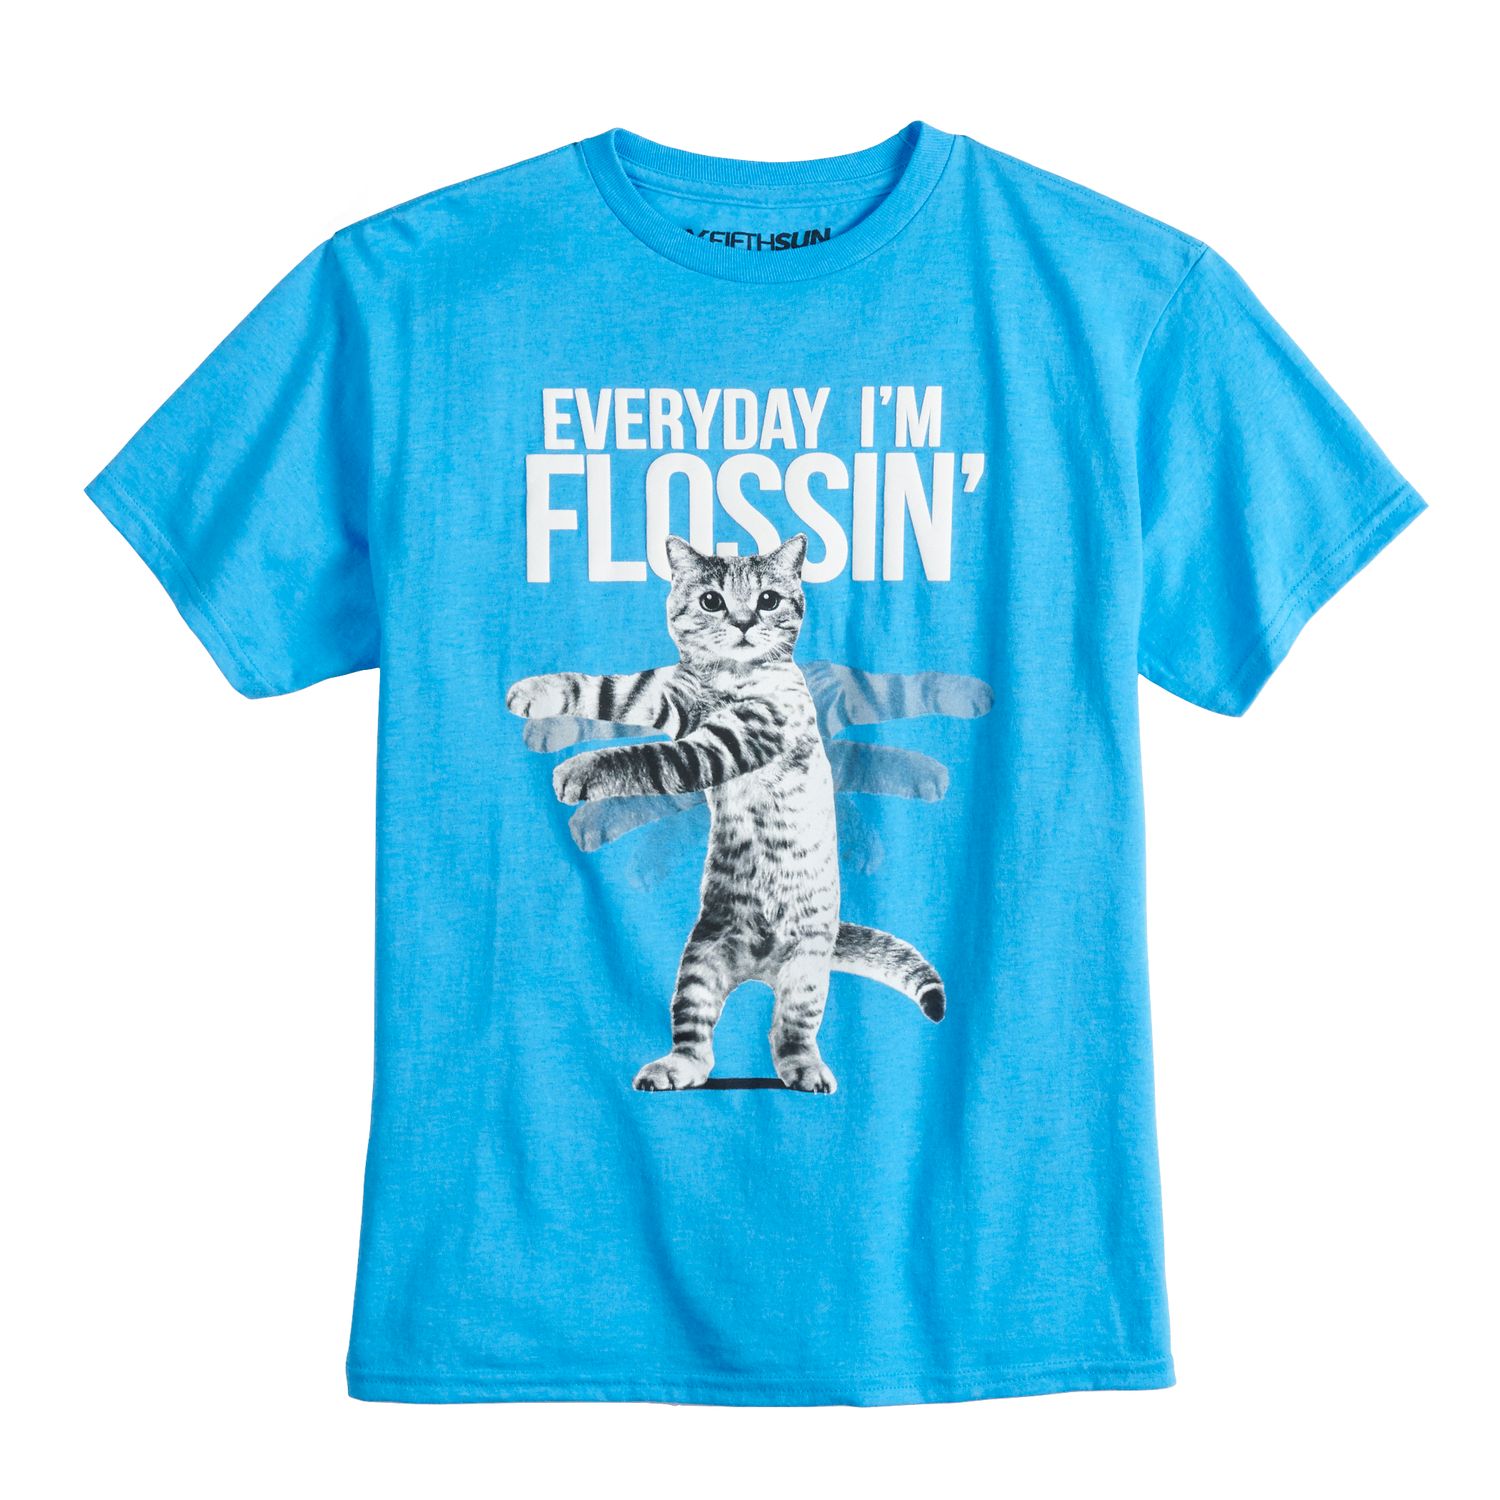 next flossin t shirt